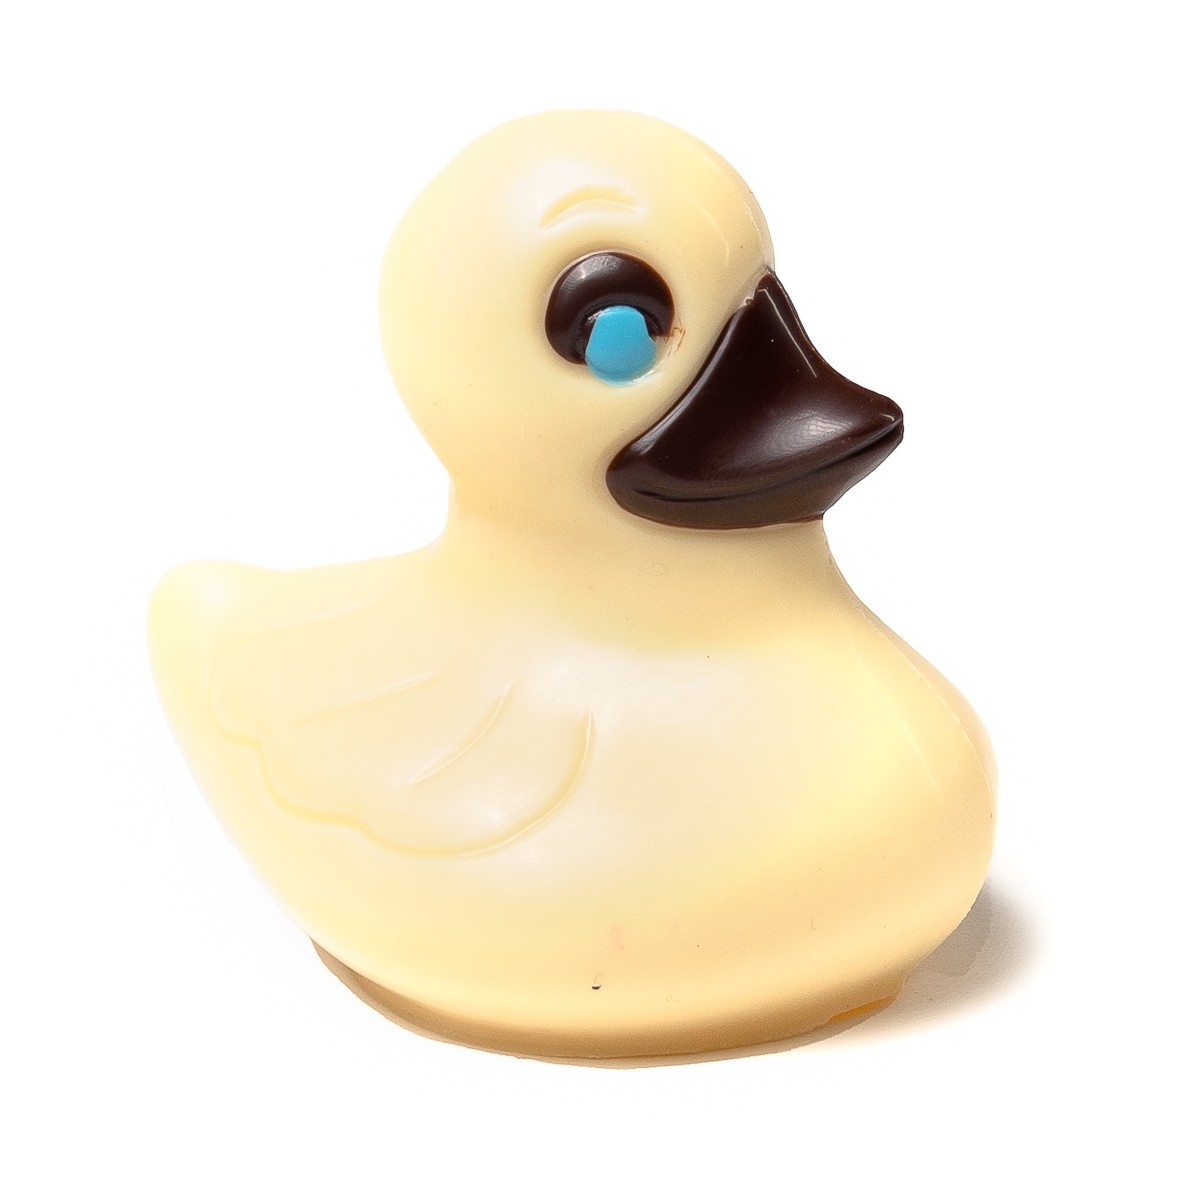 Small duck figurine (white chocolate) 75 Grs